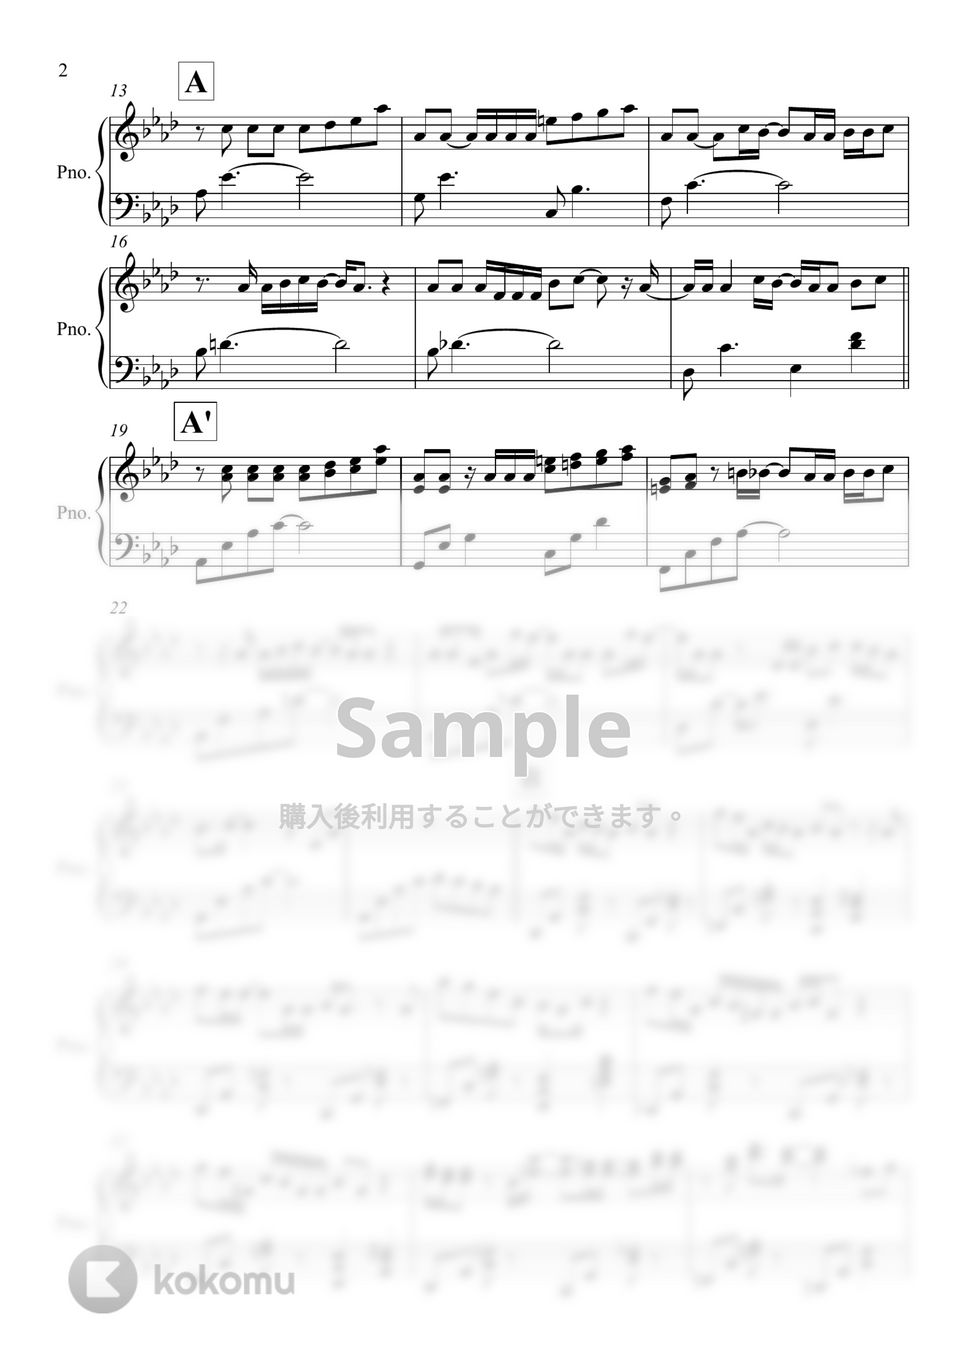 Official髭男dism - Pretender (ピアノソロ) by 泉宏樹